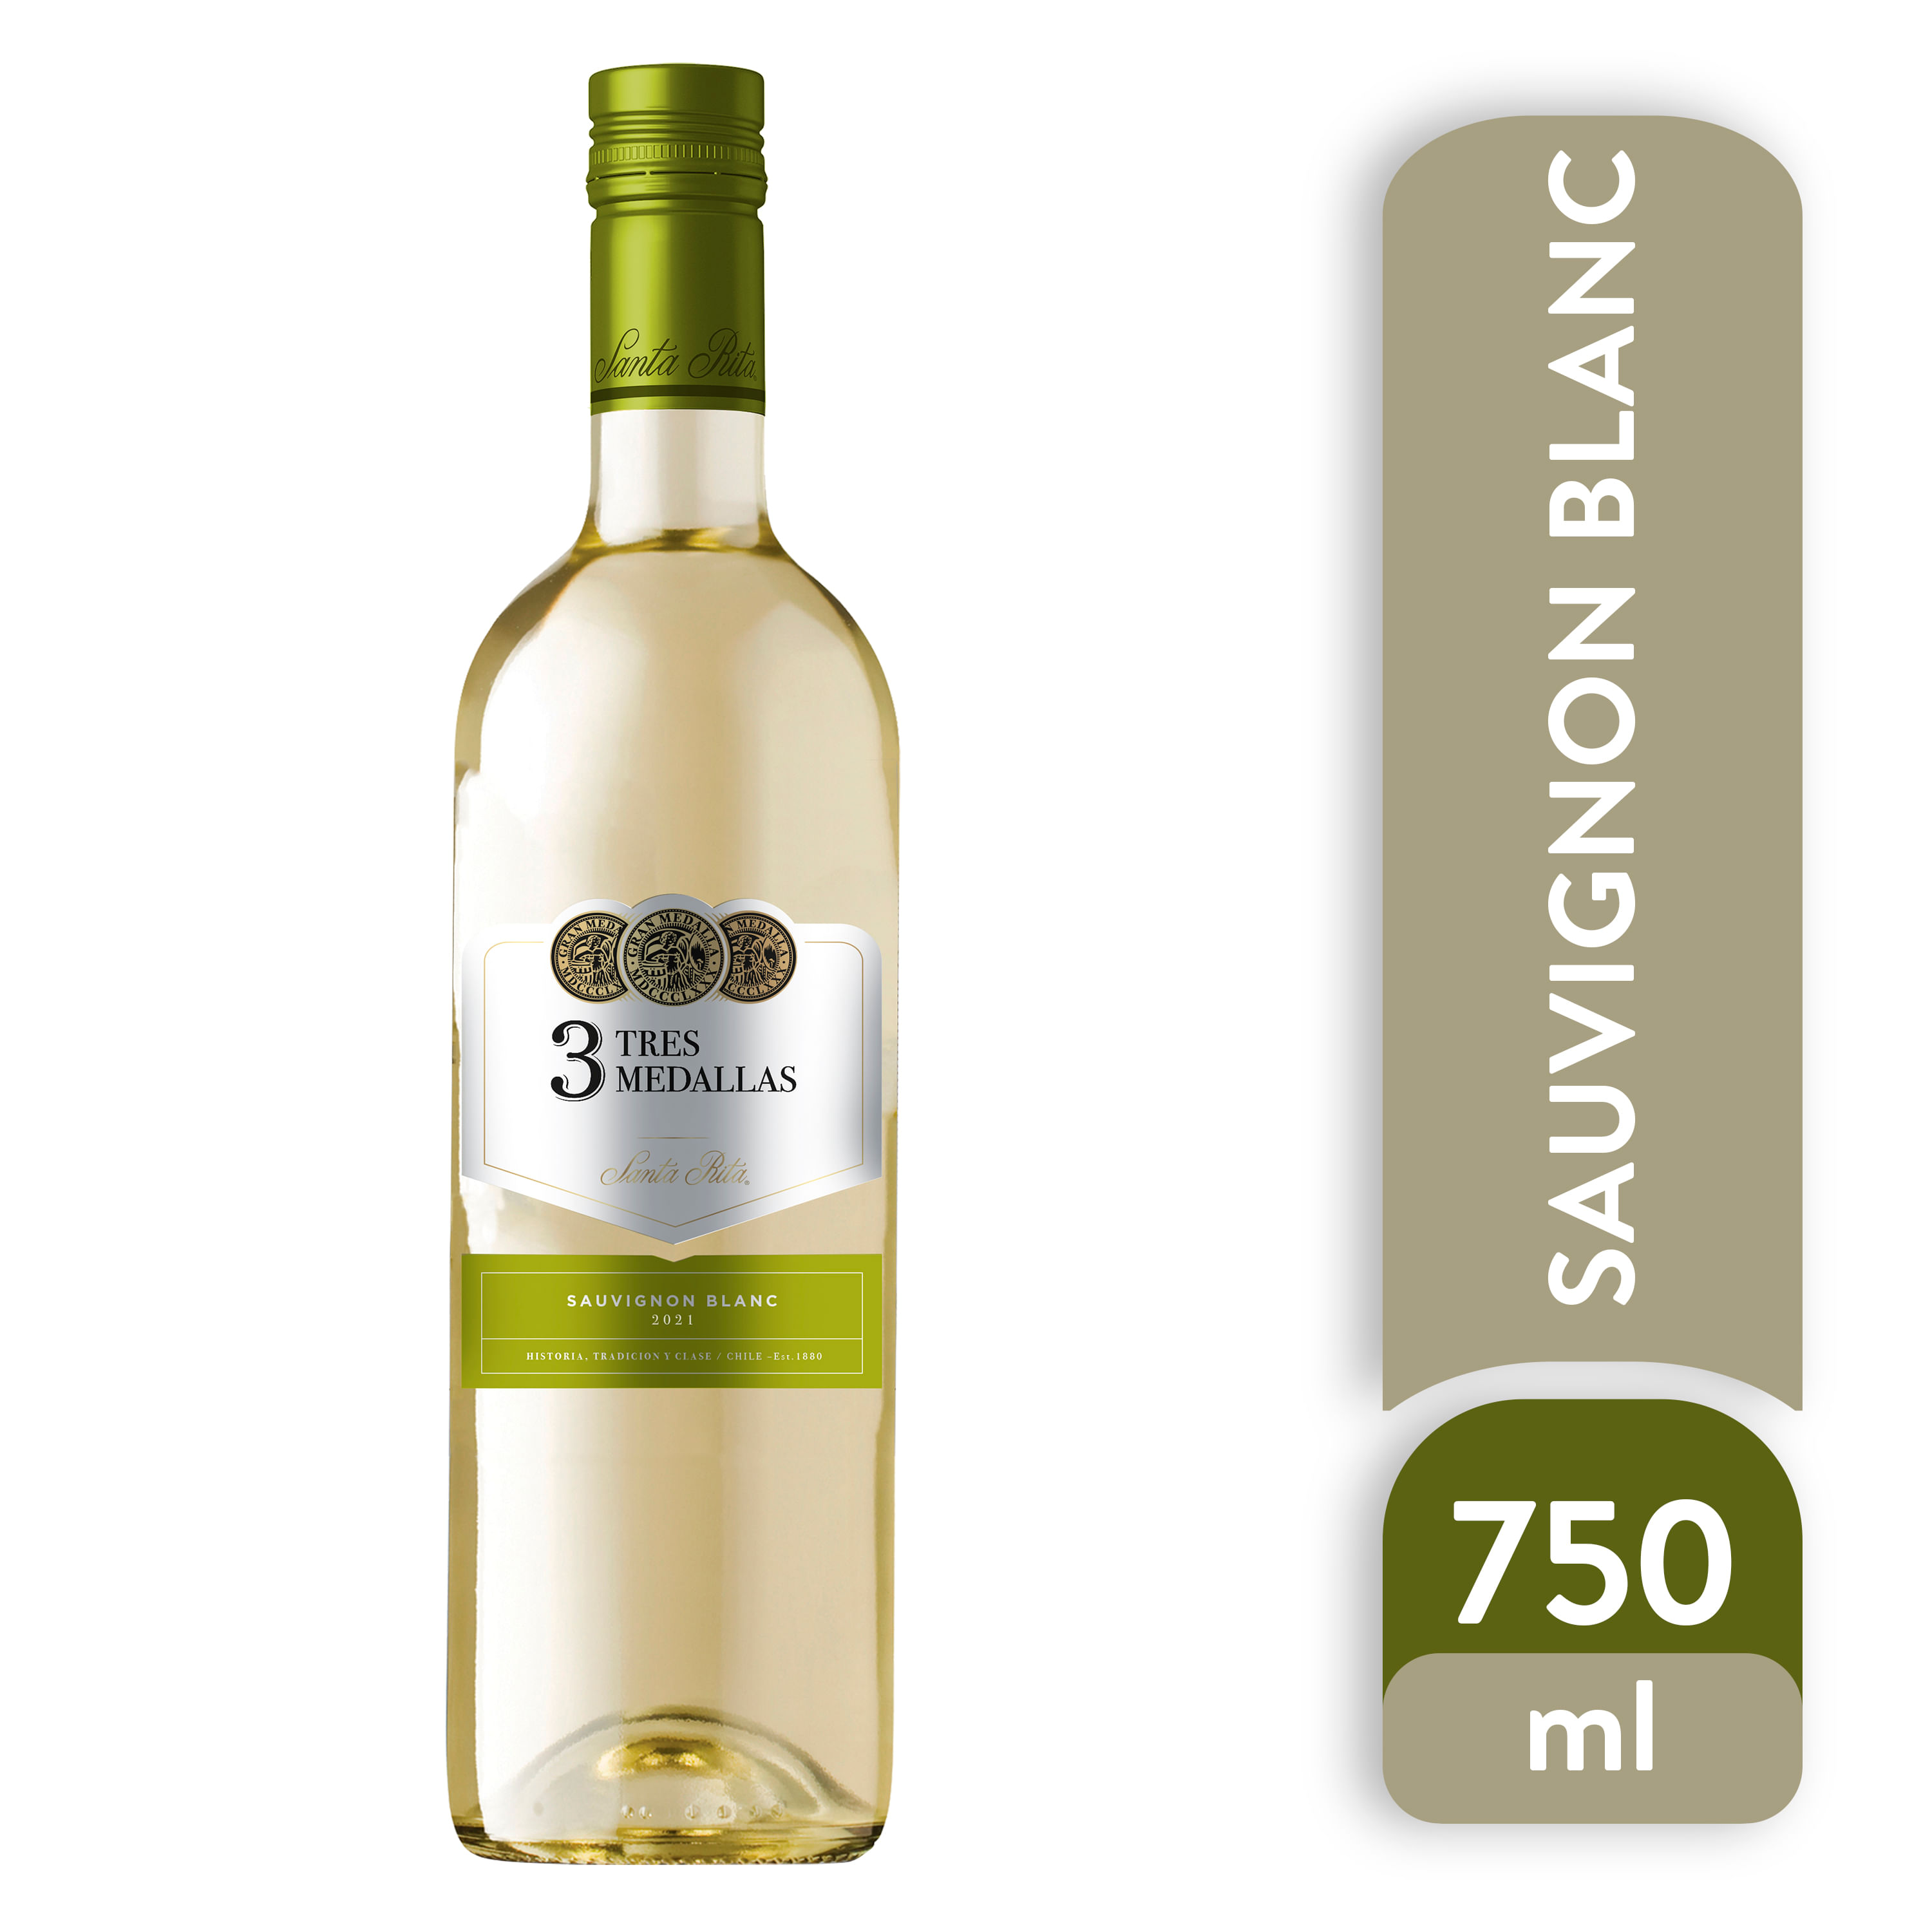 Comprar Vino blanco blanco nuclear - Supermercados DIA